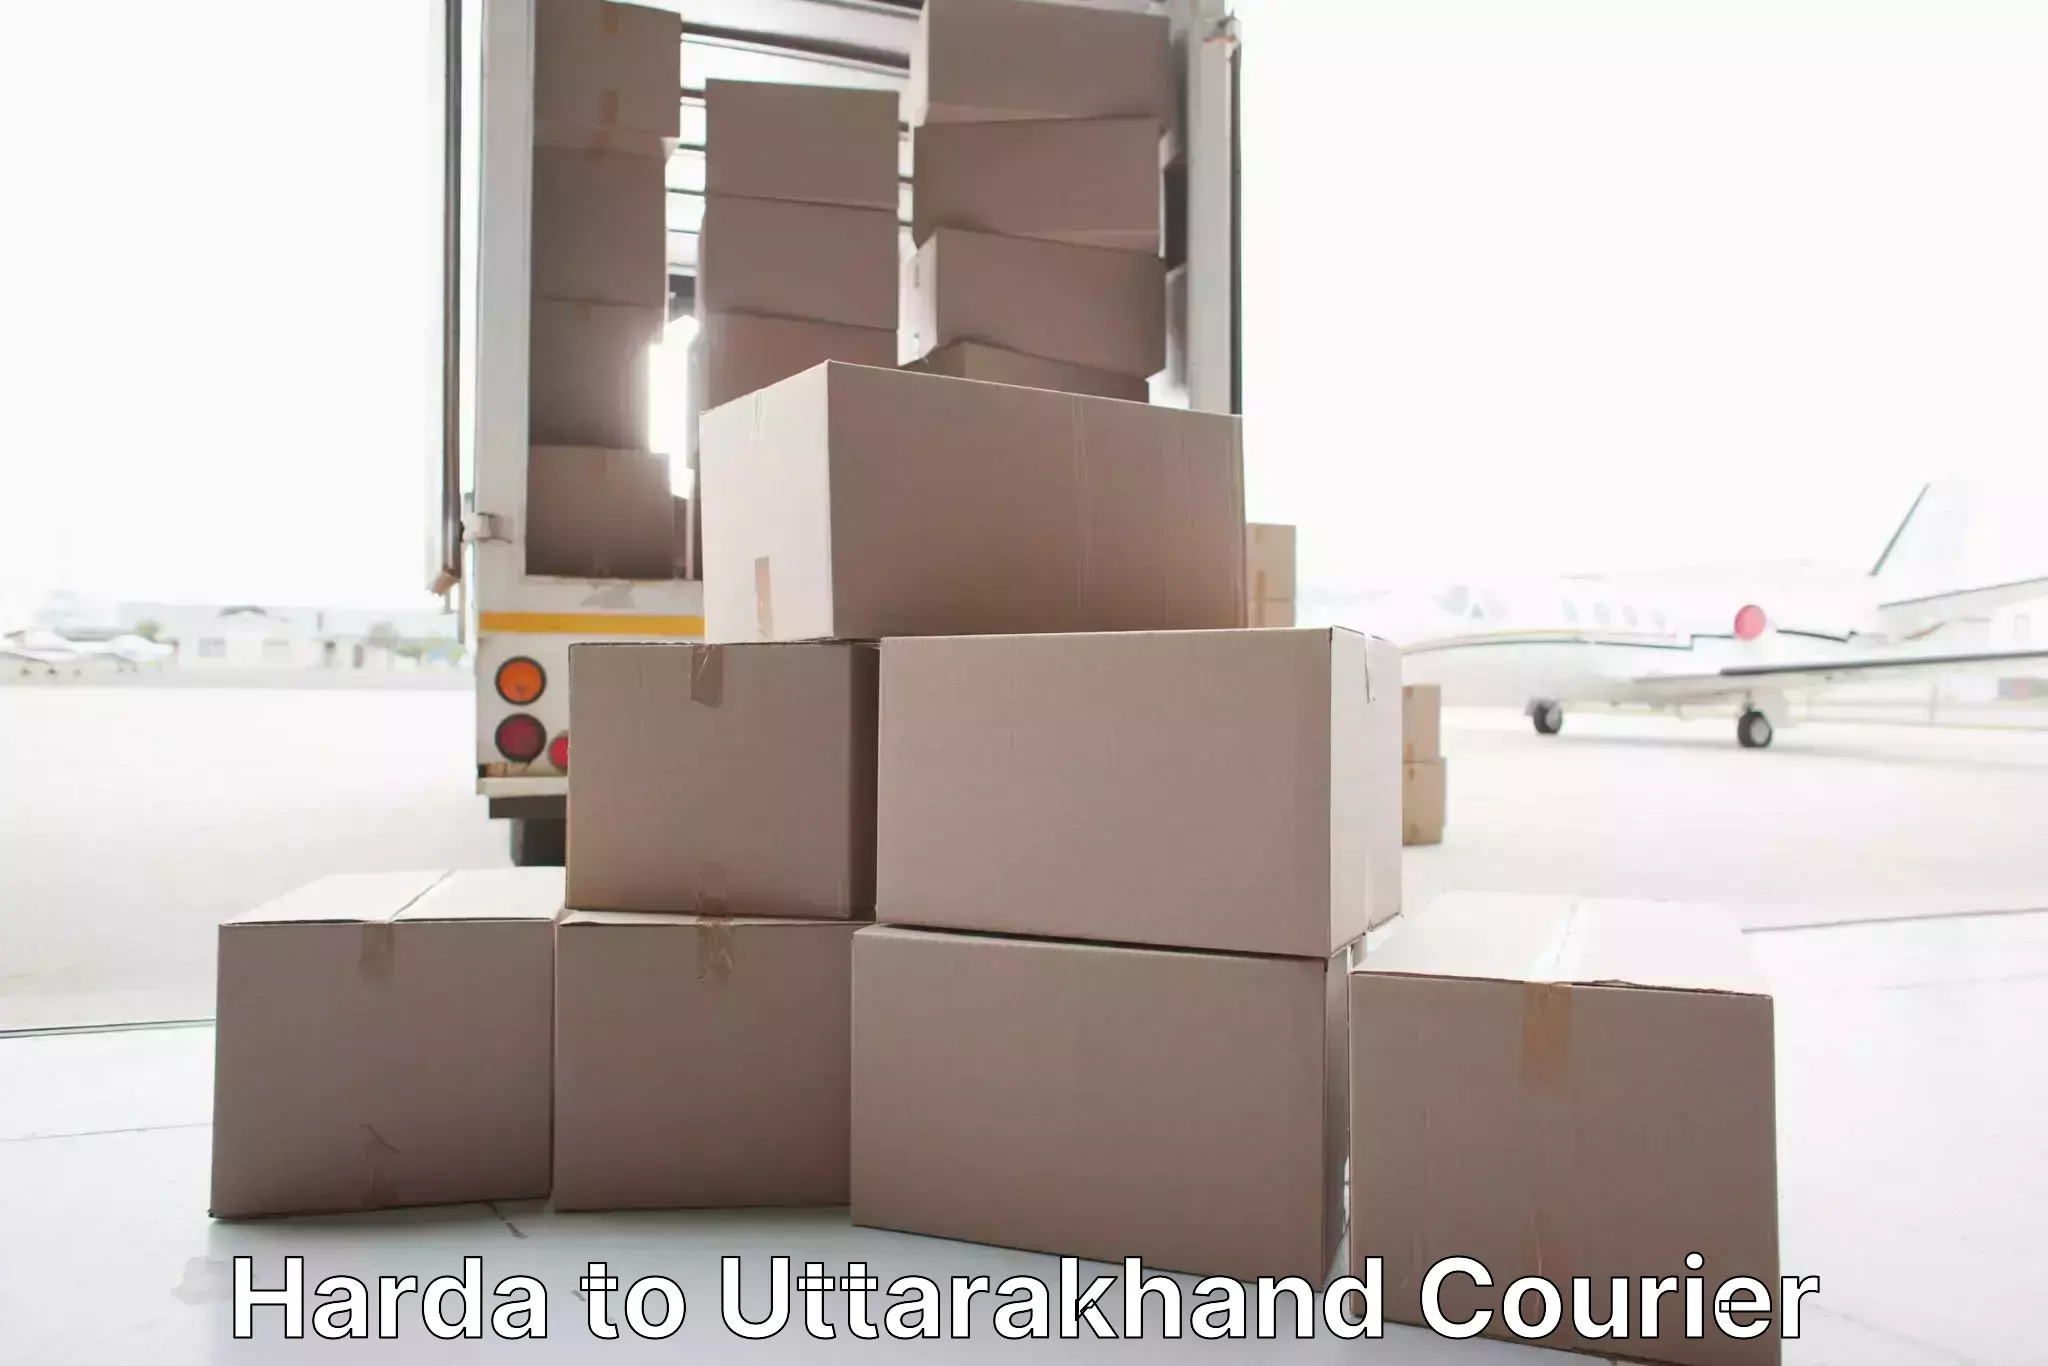 Professional moving company Harda to Rudraprayag